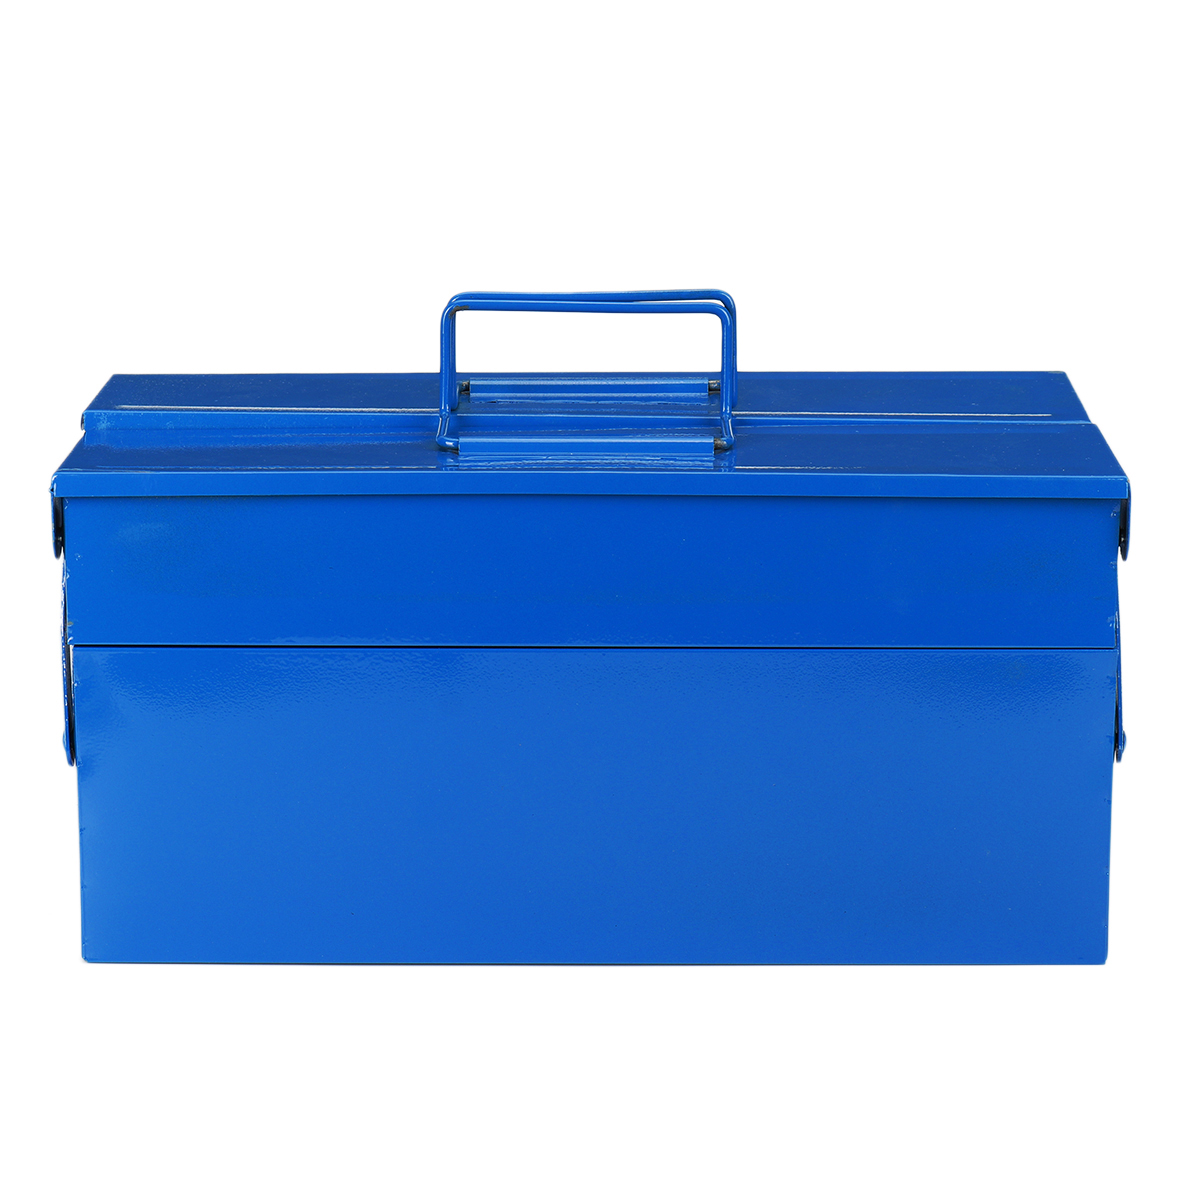 1PCS-Blue-Double-layer-Iron-Toolbox-Double-layer-Iron-Toolbox-Portable-Folding-Toolbox-Household-Sto-1900889-2